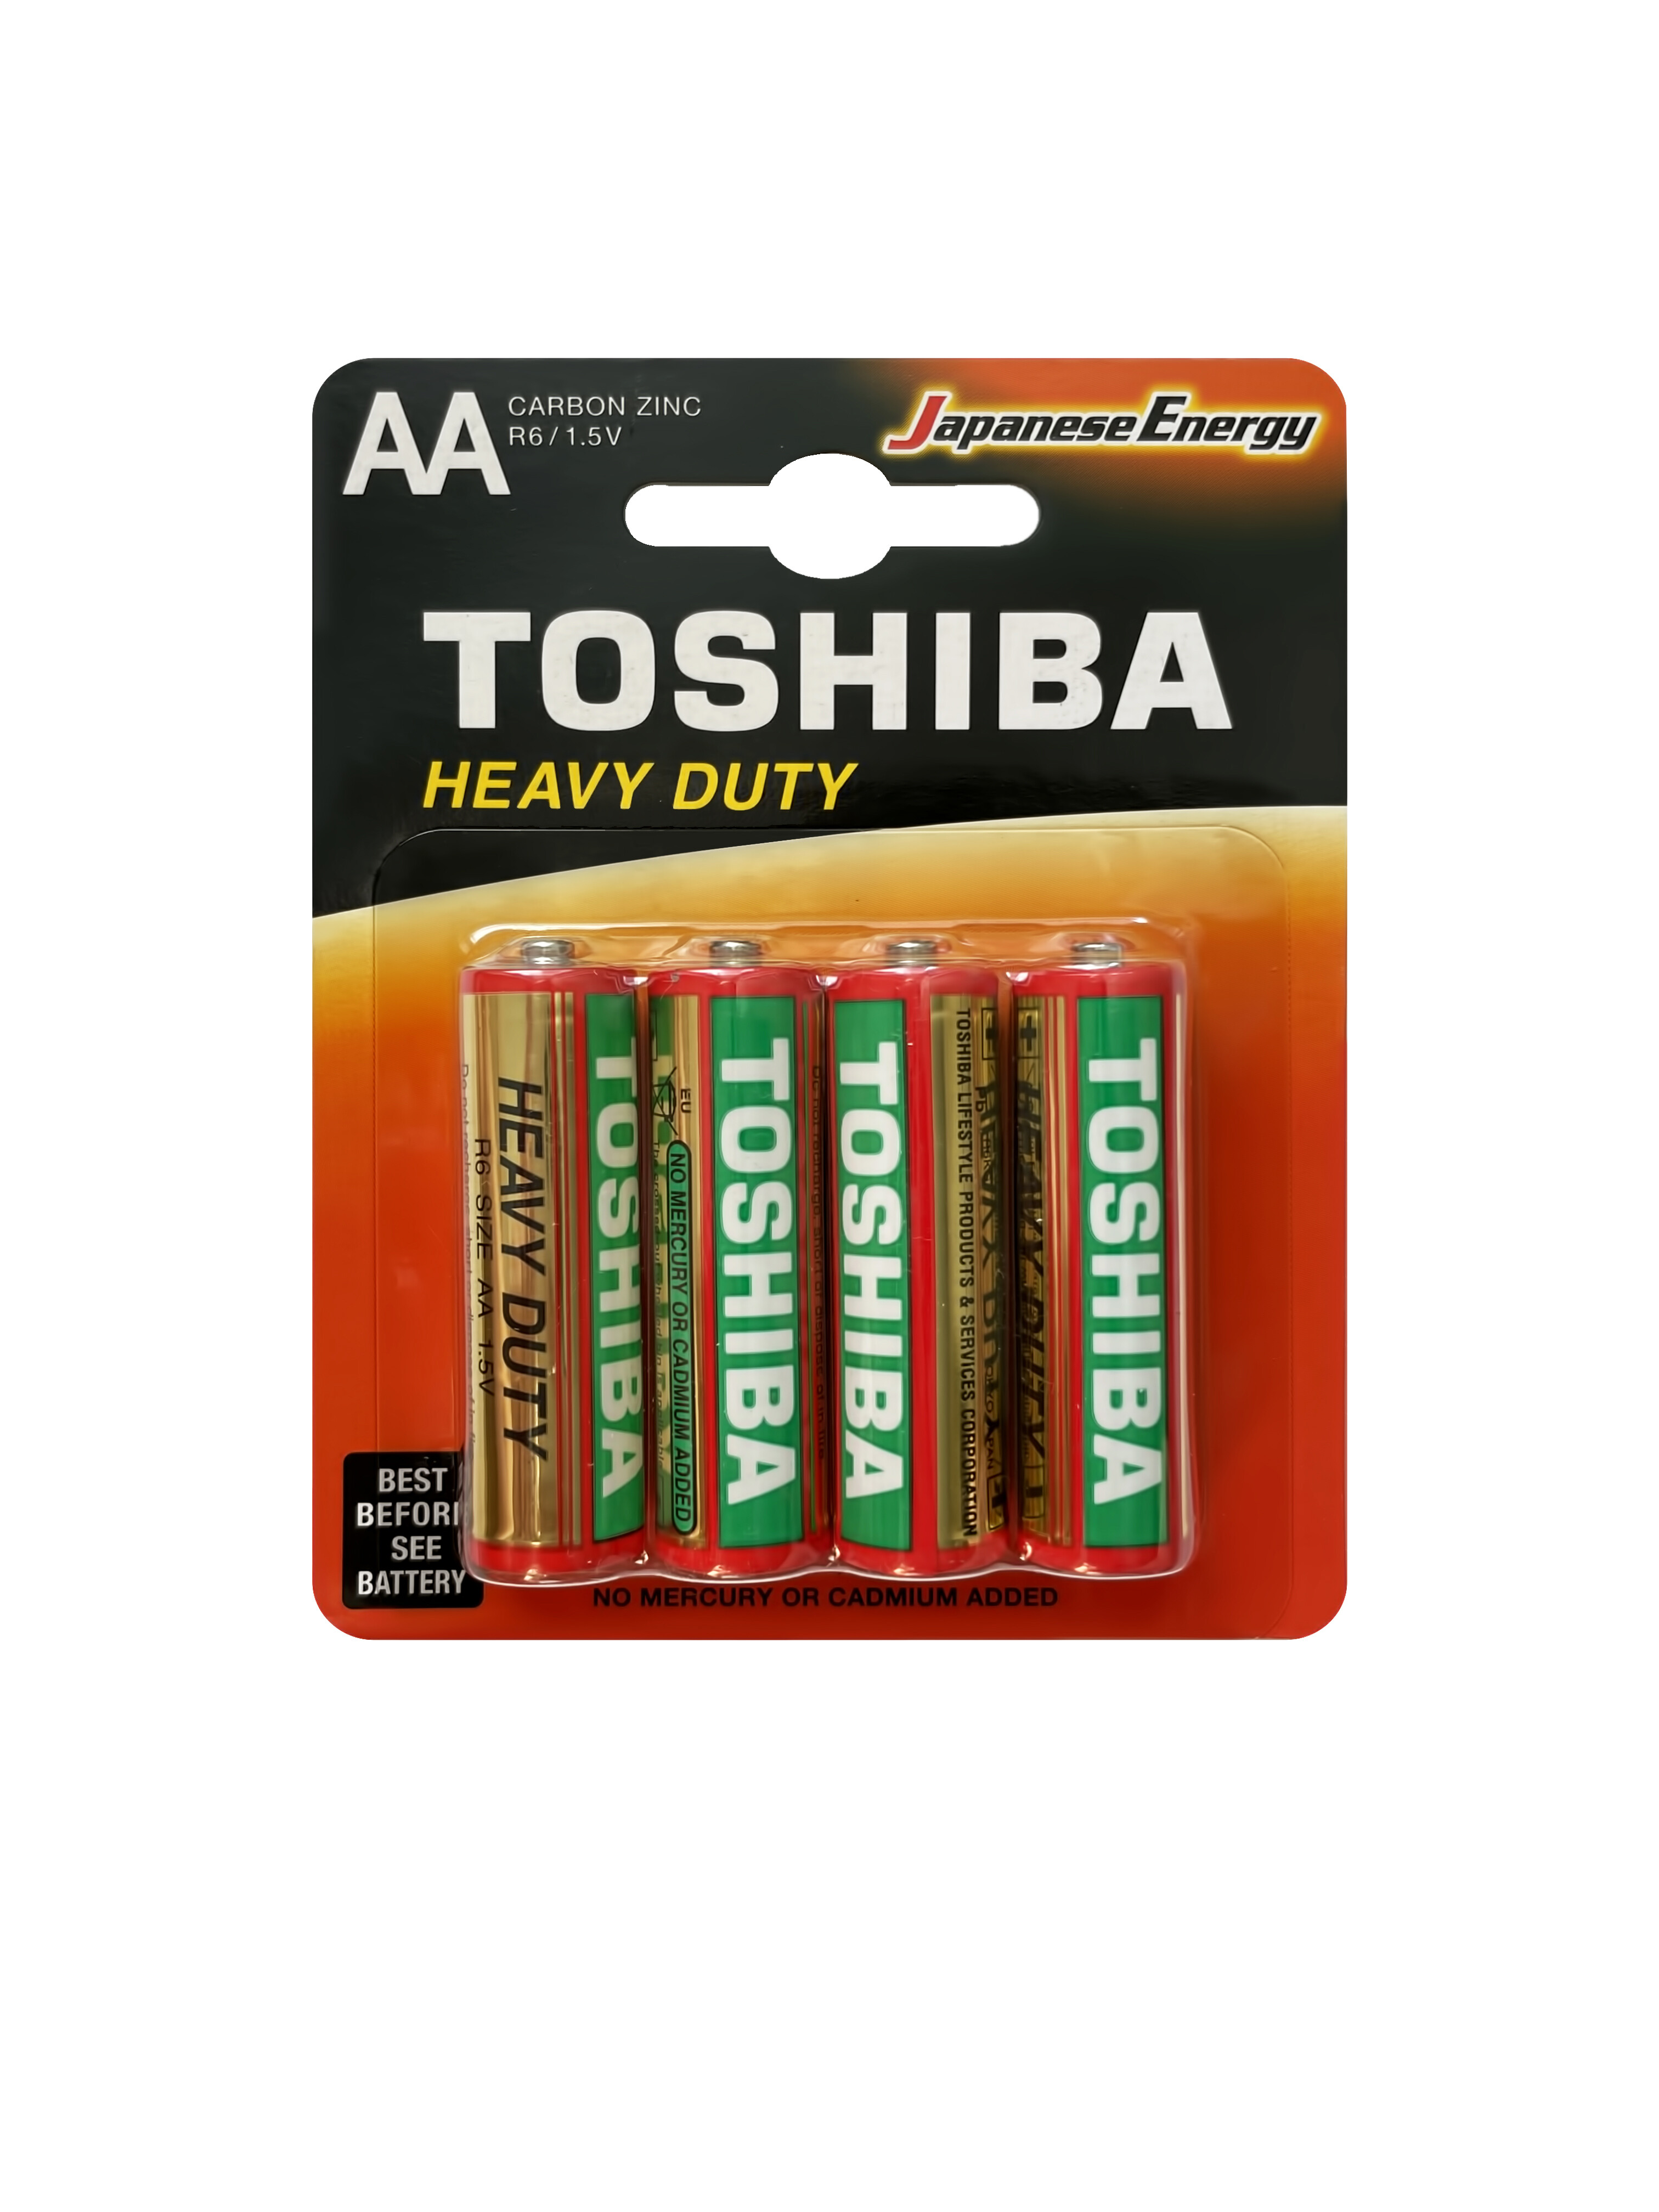 Батарейки Toshiba R6 солевые (zinc) ПАЛЬЧИК Heavy Duty (4шт) AA 1,5V батарейки duracell aaa 1 5в 18 шт